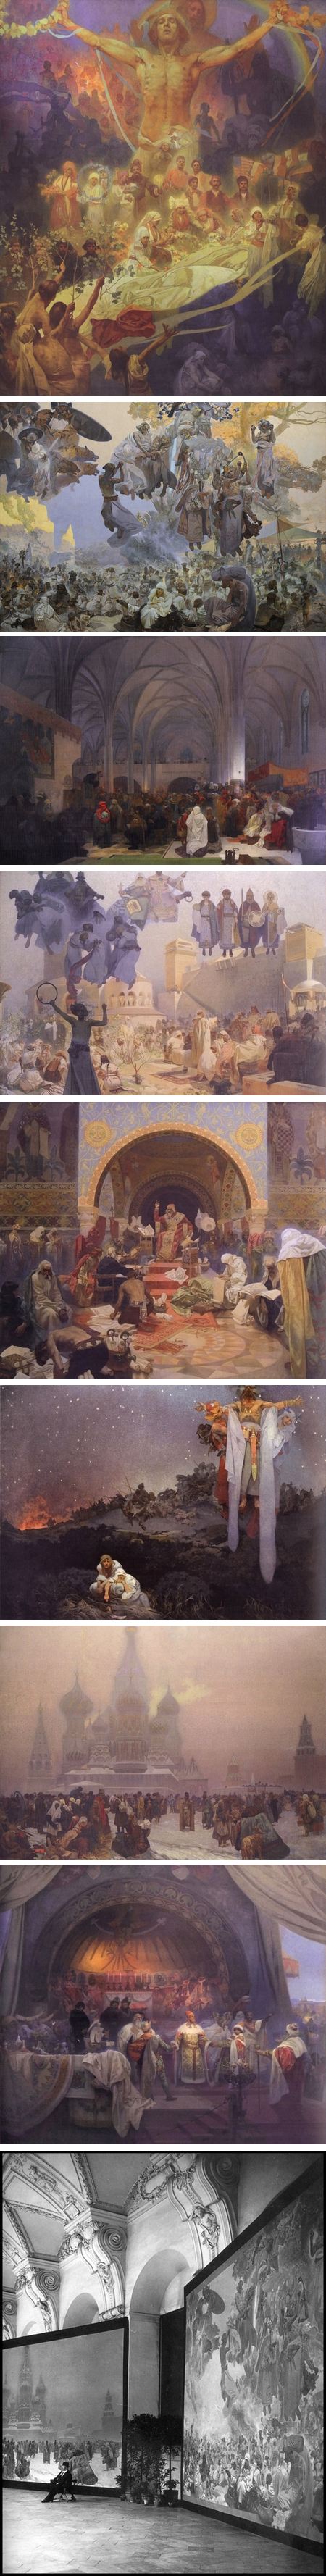 The Slav Epic, Alphonse Mucha (Alfons Mucha)